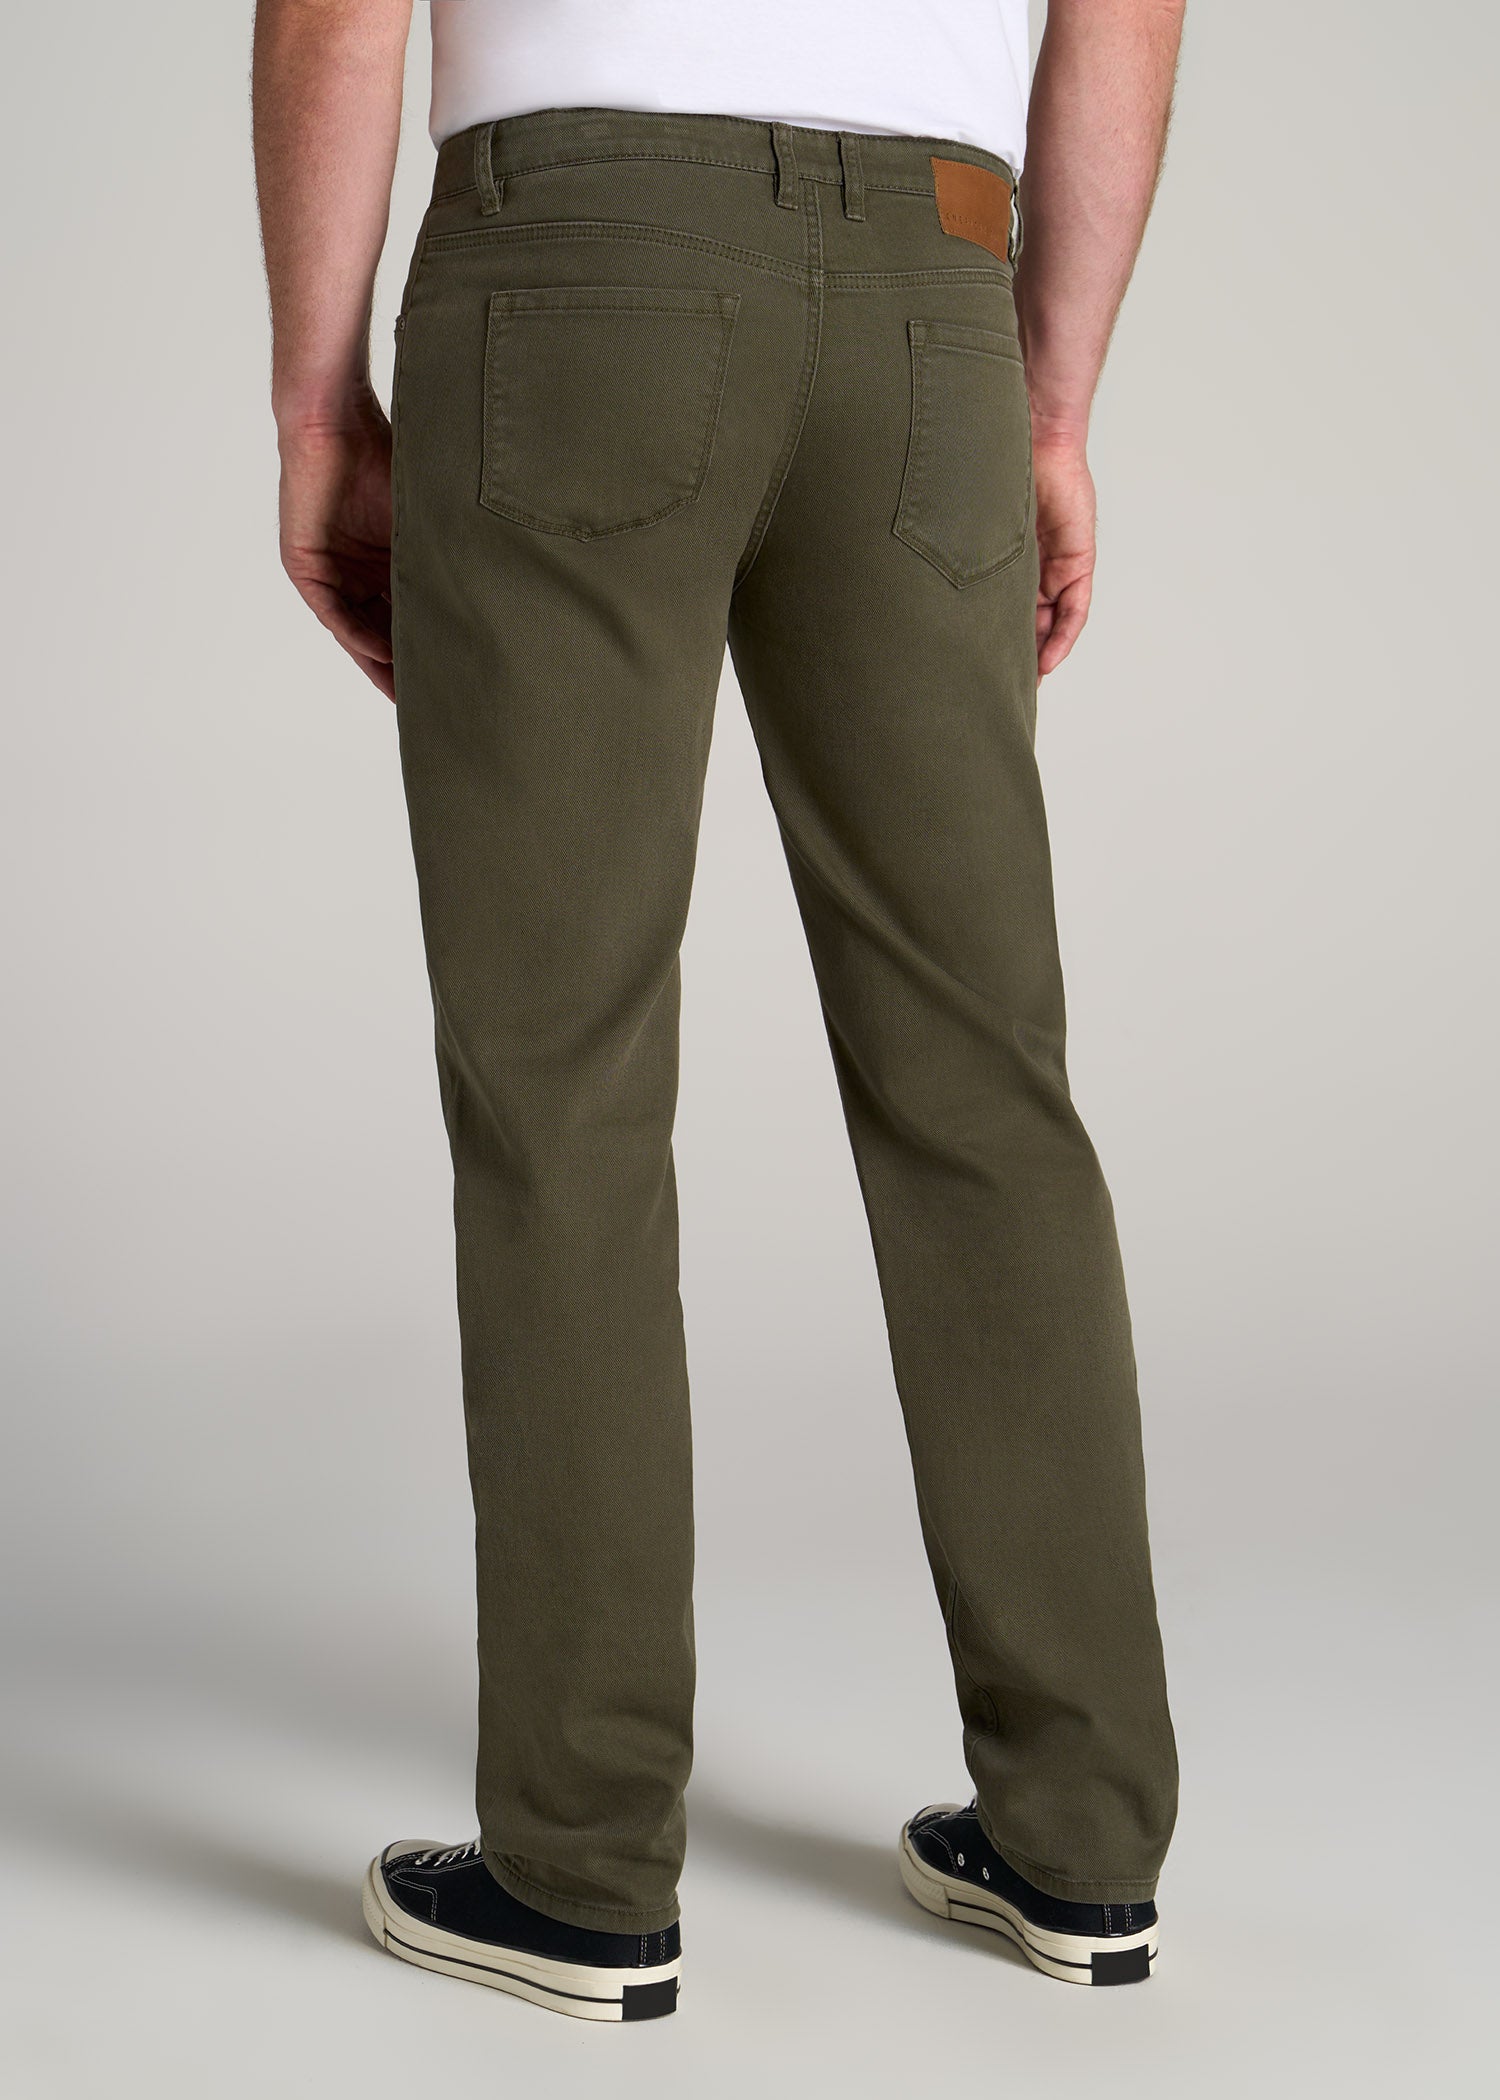    American-Tall-Men-J1-Jeans-Olive-Green-Wash-back